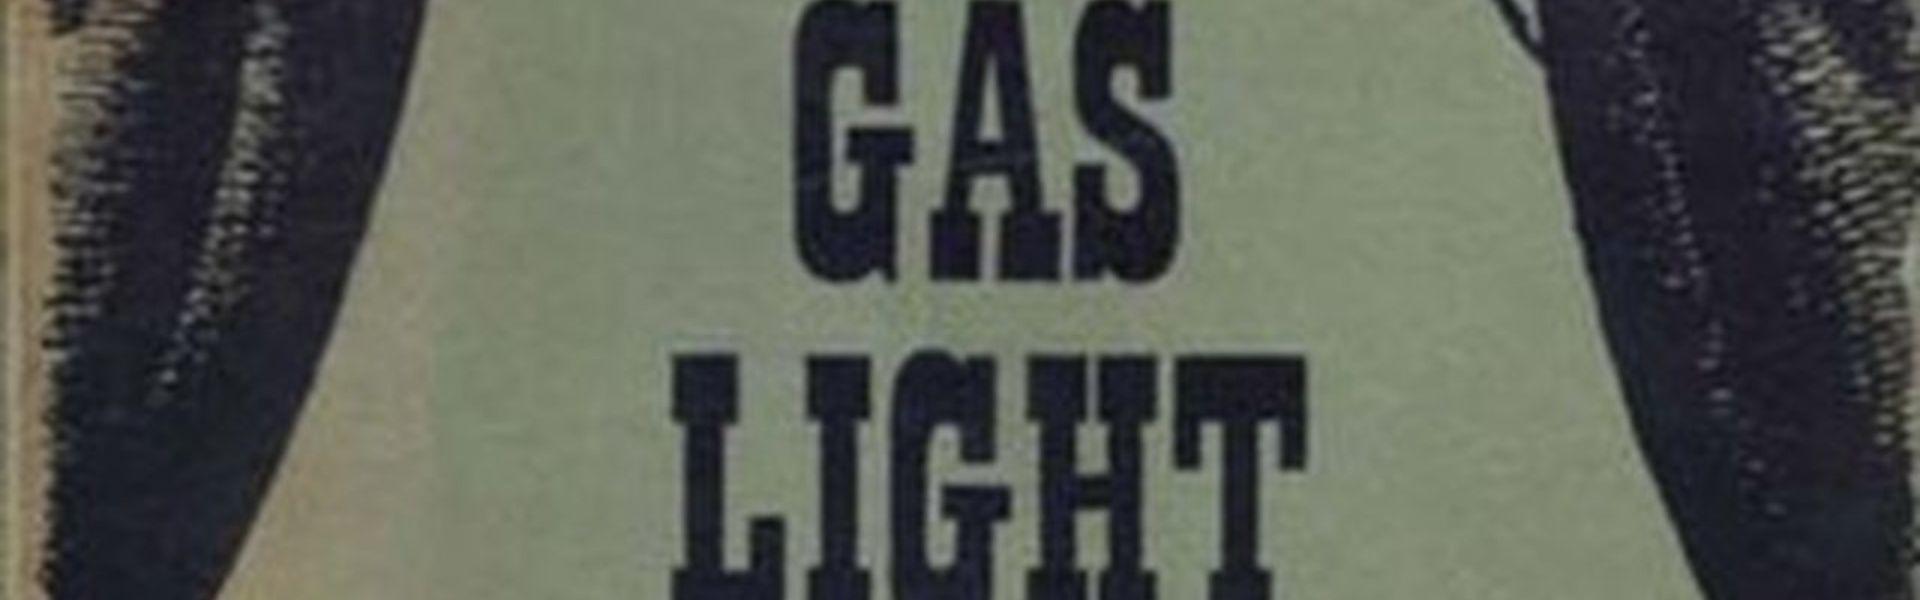 Gas Light cover by Patrick Hamilton